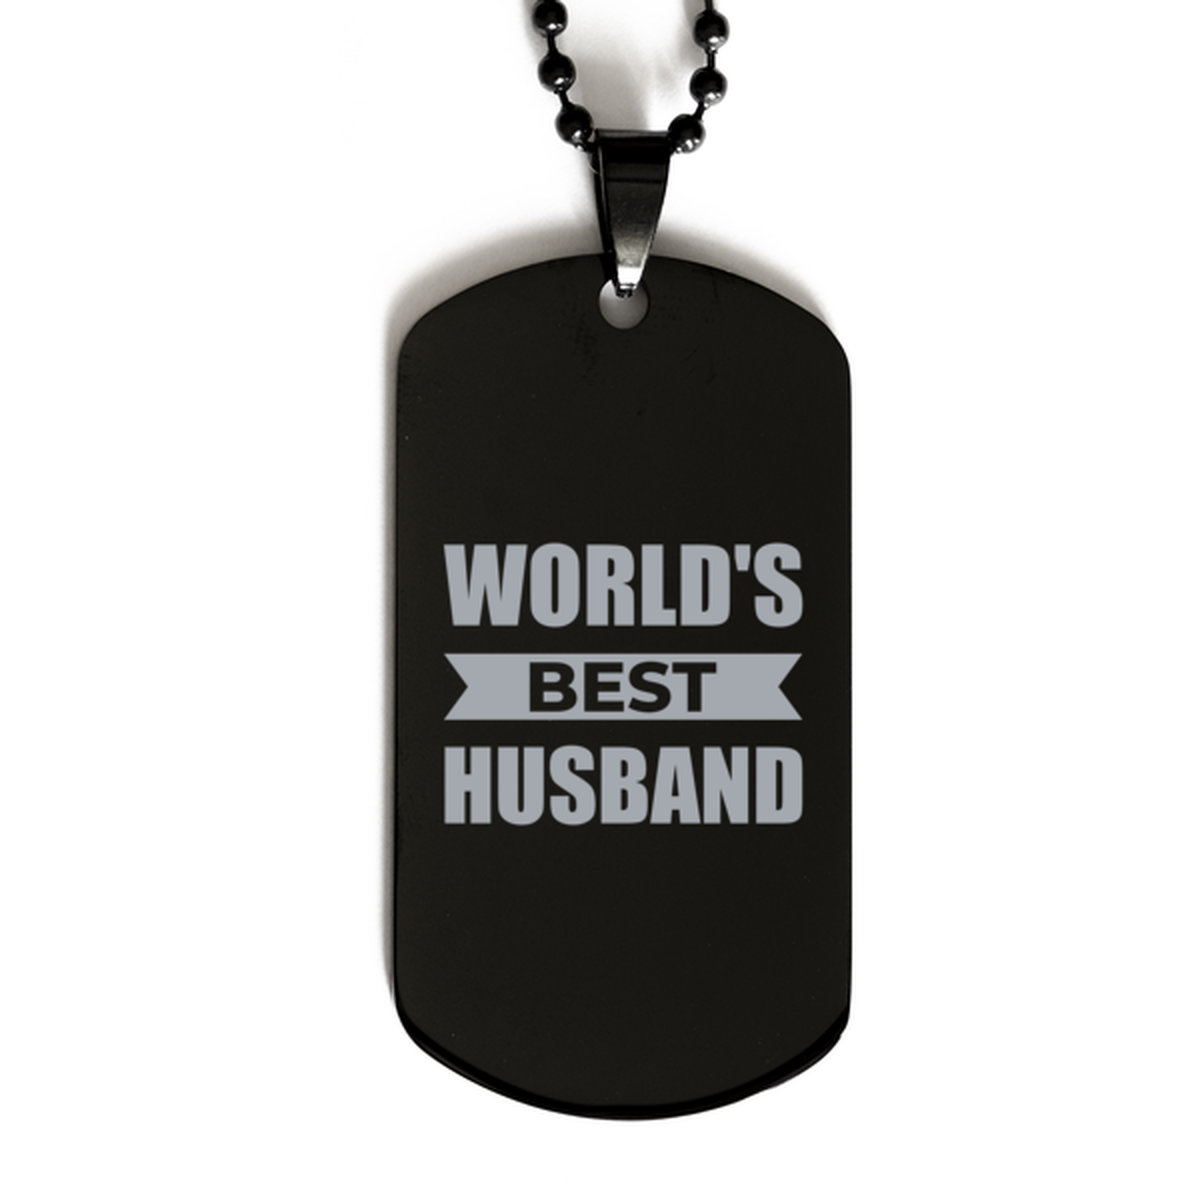 Worlds Best Husband Gifts, Funny Black Engraved Dog Tag For Husband, Birthday Presents For Men